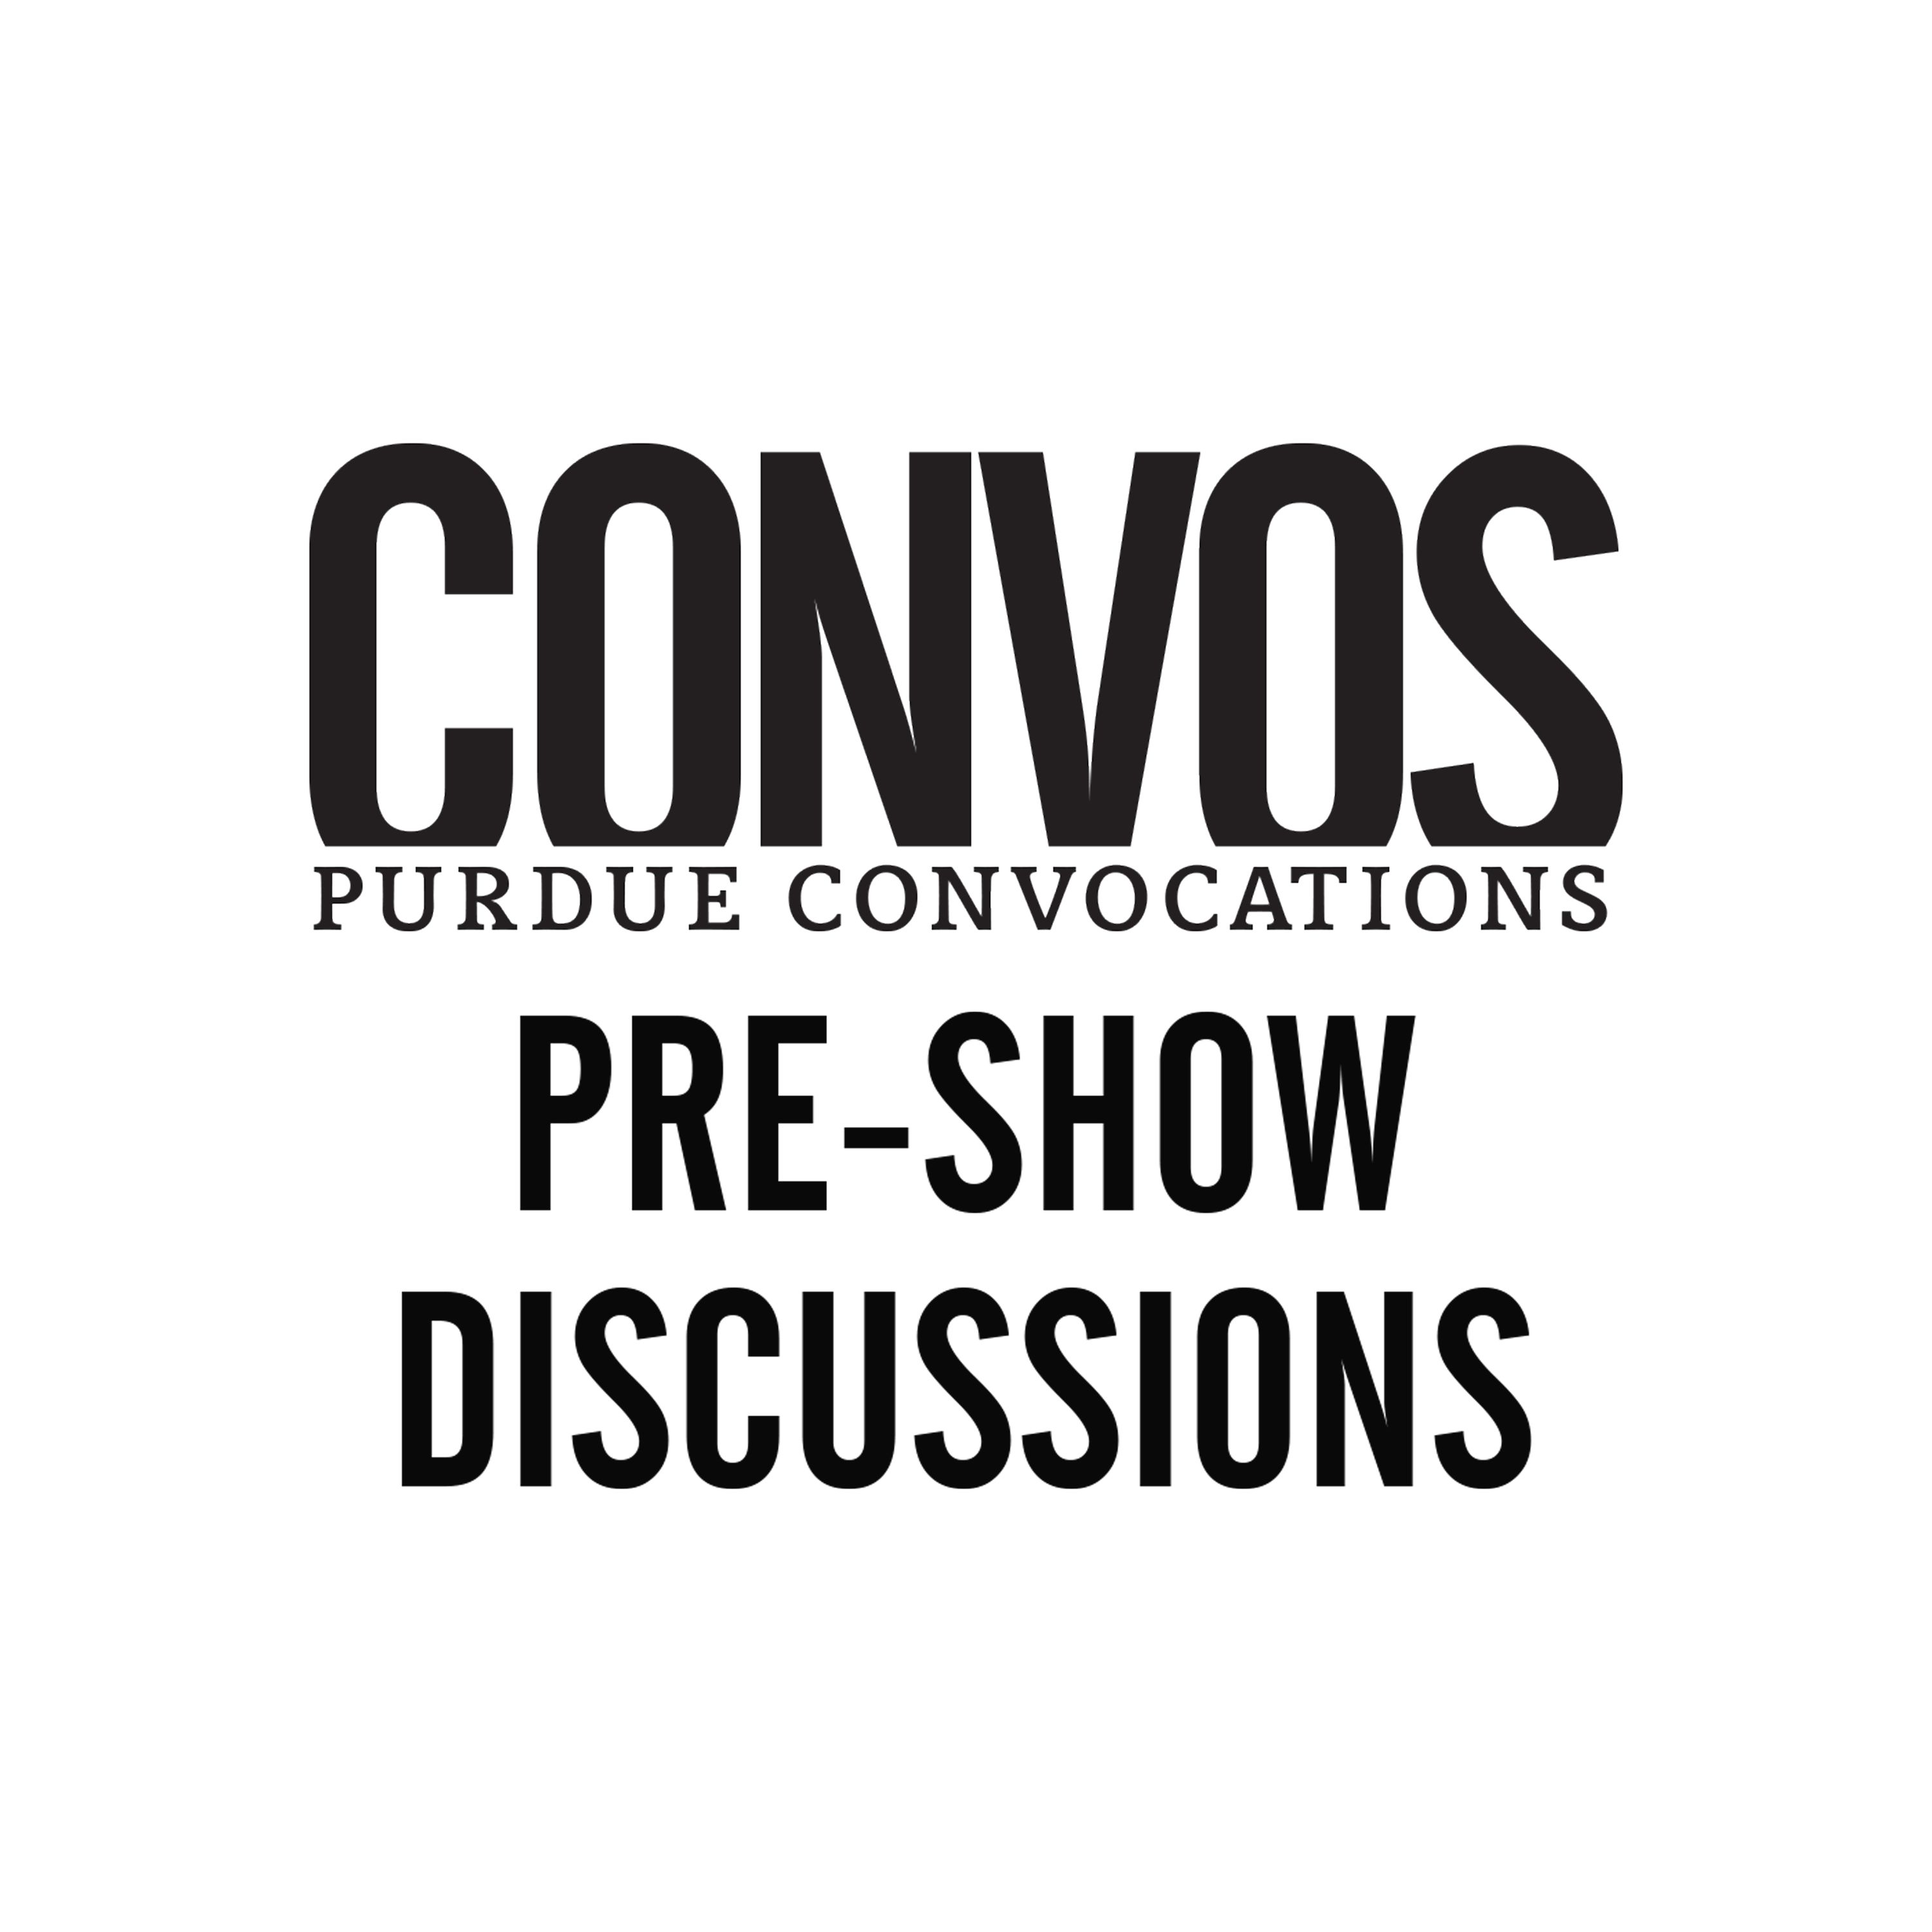 Purdue Convocations Pre-Show Discussions